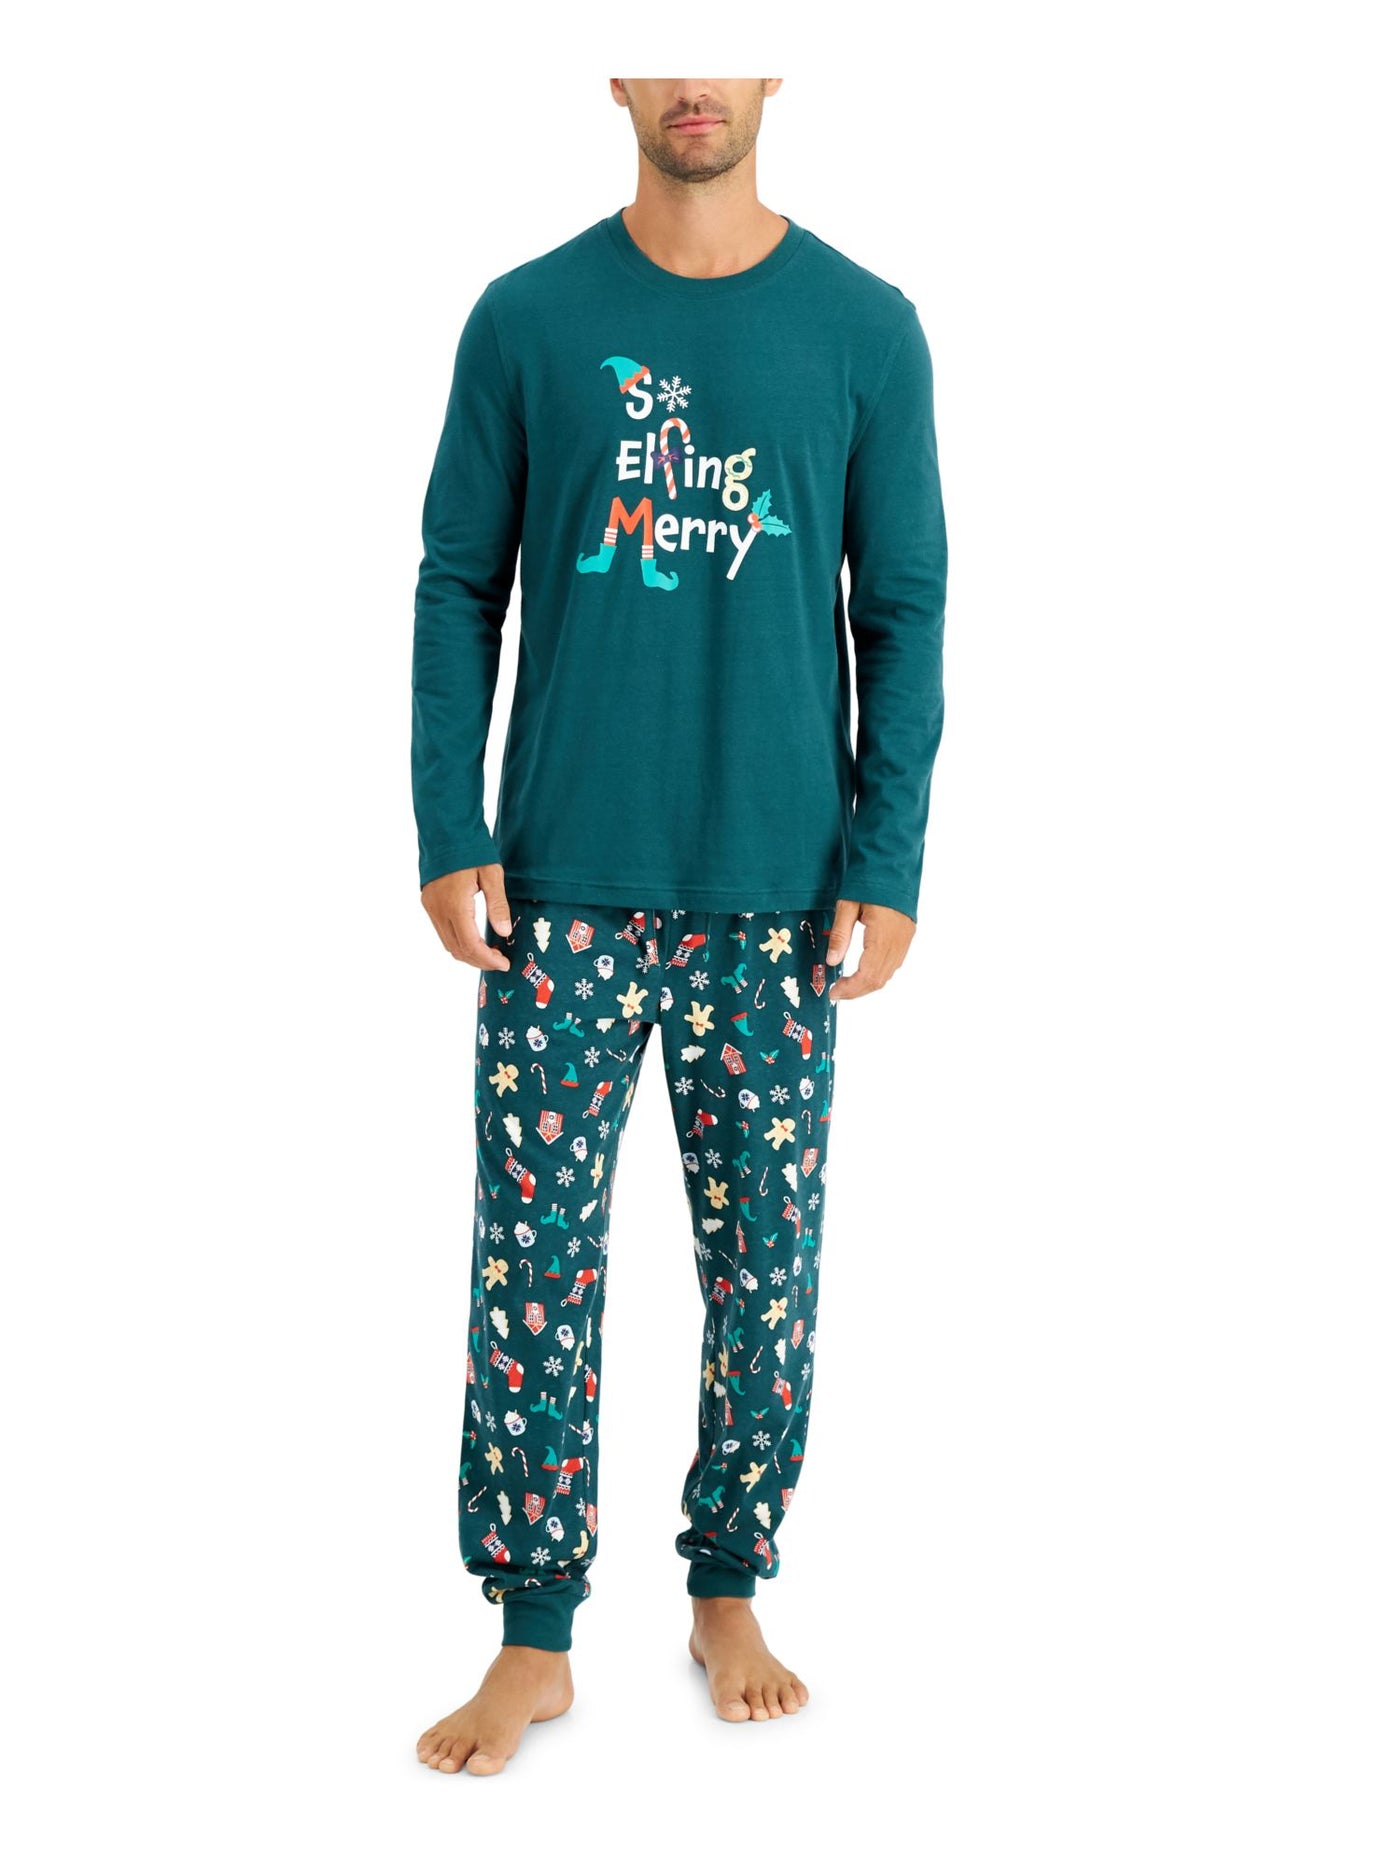 FAMILY PJs Mens Green Printed Elastic Band Long Sleeve T-Shirt Top Cuffed Pants Pajamas XXL